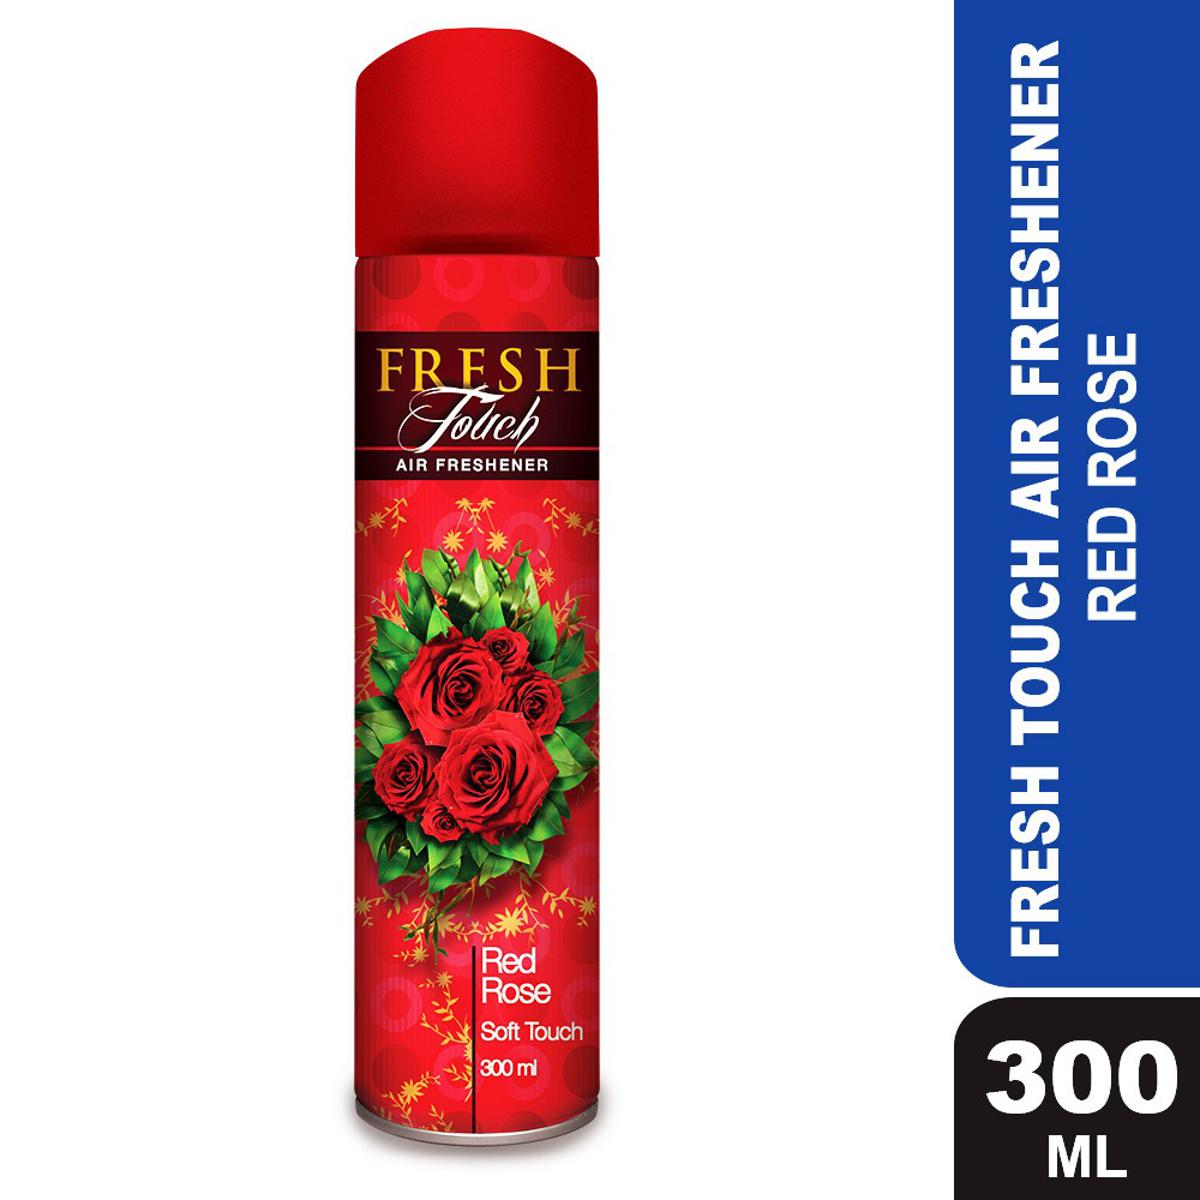 Fresh Touch Air Freshener - Red Rose - 300 ML